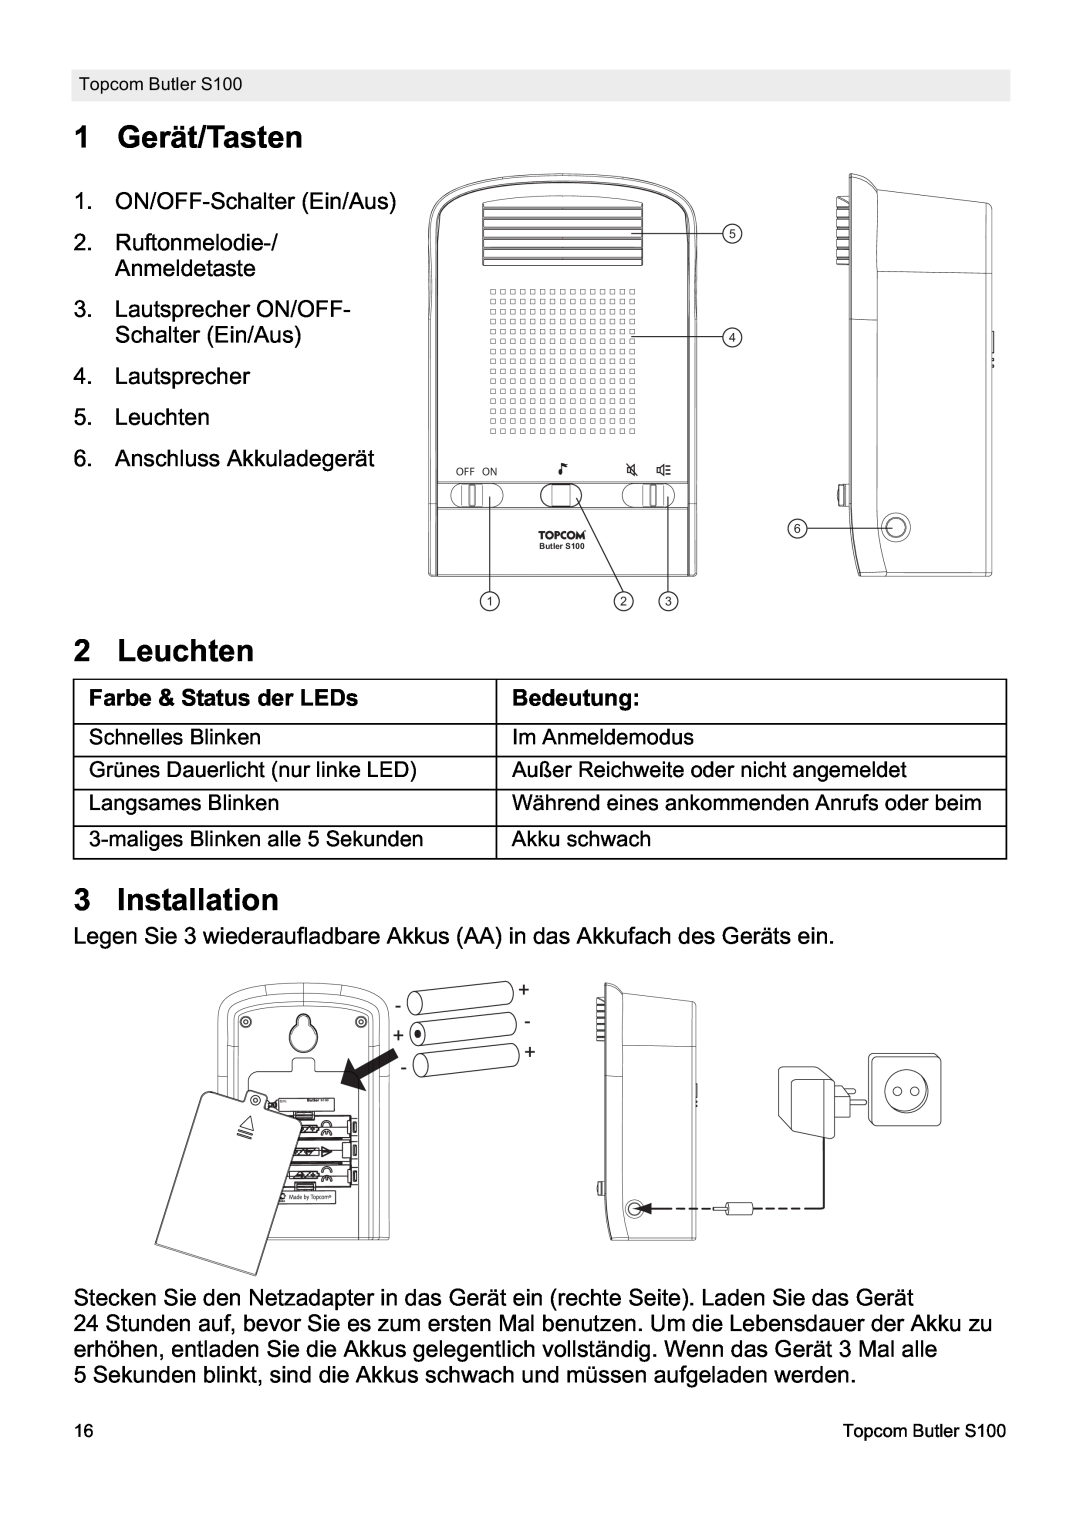 Topcom S100 manual do utilizador 1 Gerät/Tasten, Leuchten, Installation, Farbe & Status der LEDs, Bedeutung 